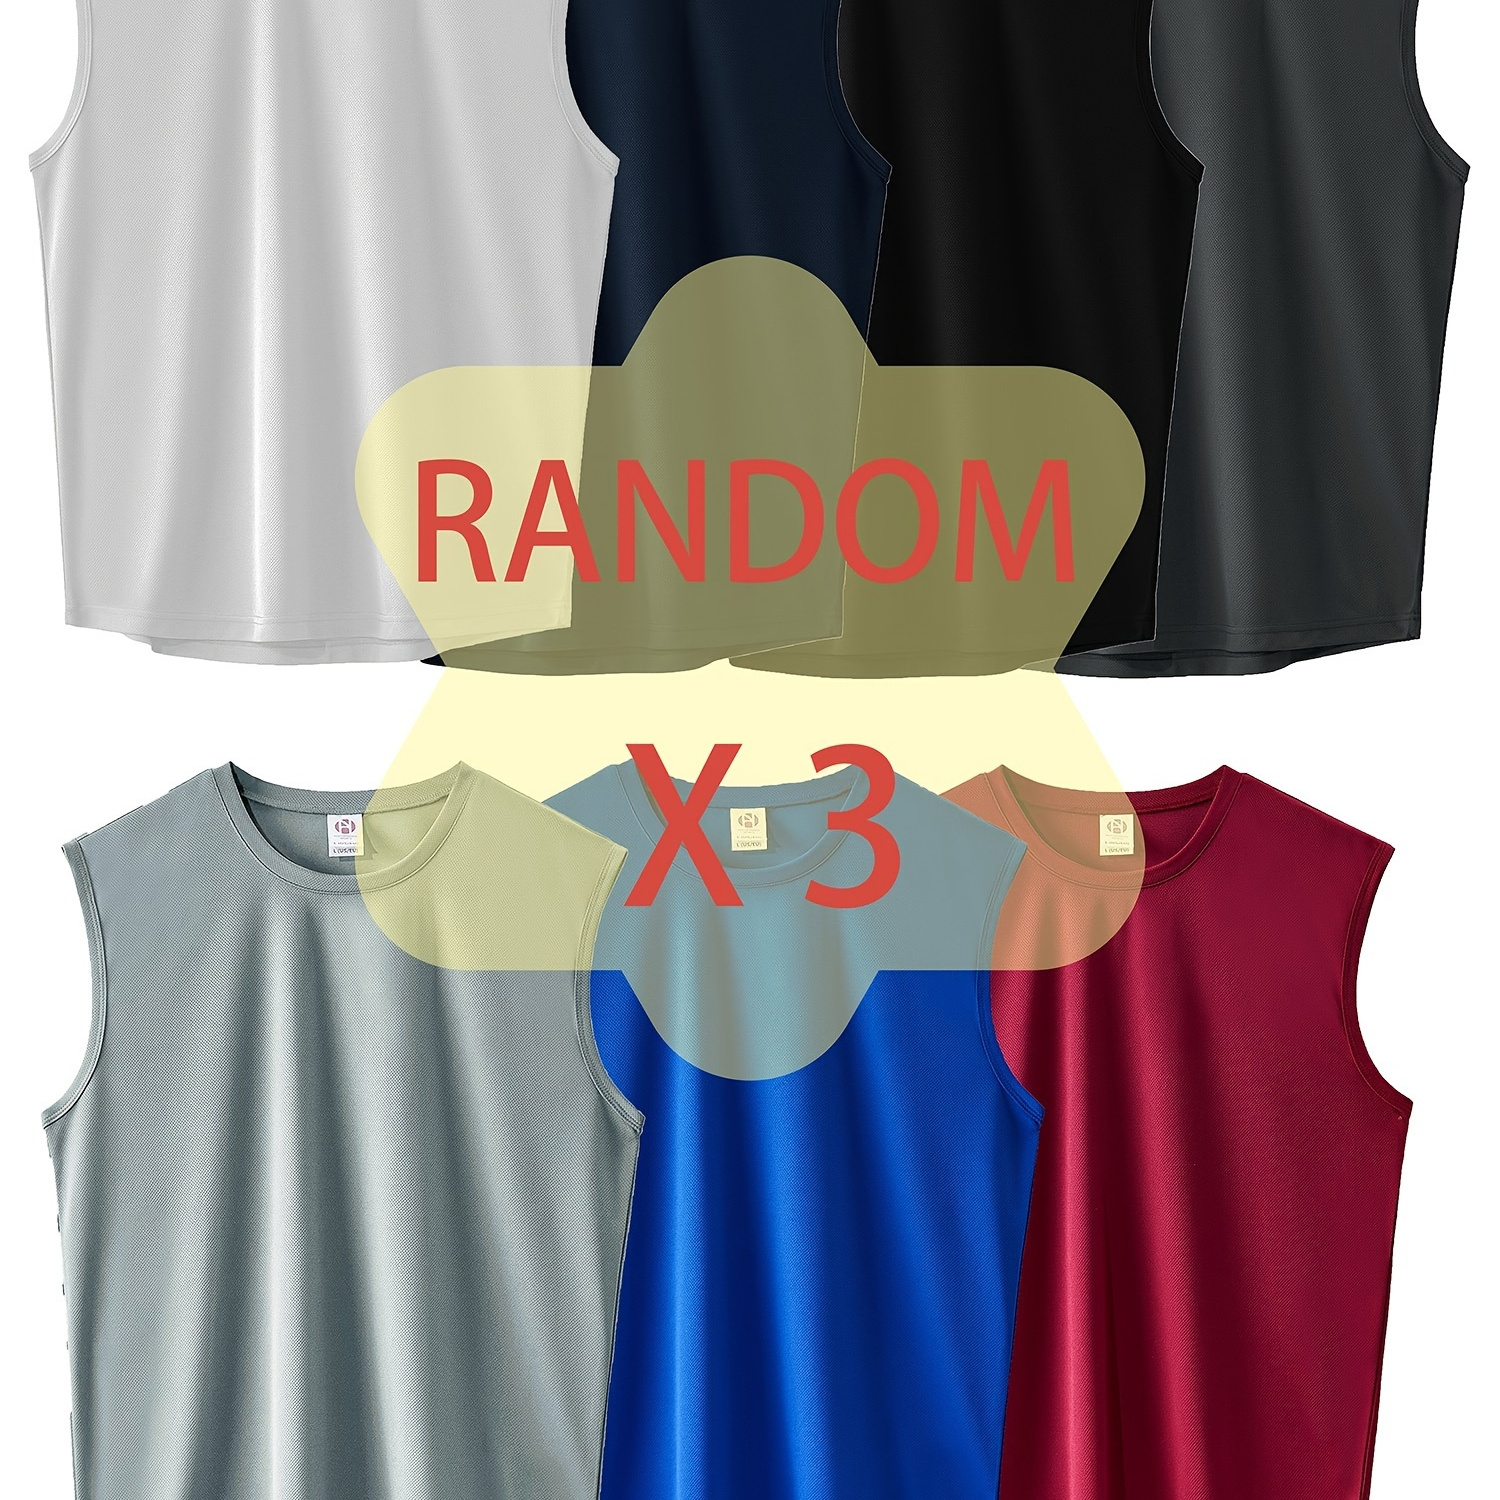 

3pcs Random Summer Men's Quick Dry Moisture-wicking Breathable Tank Tops, Athletic Gym Bodybuilding Sports Sleeveless Shirts, For Running Training, Men's Clothing